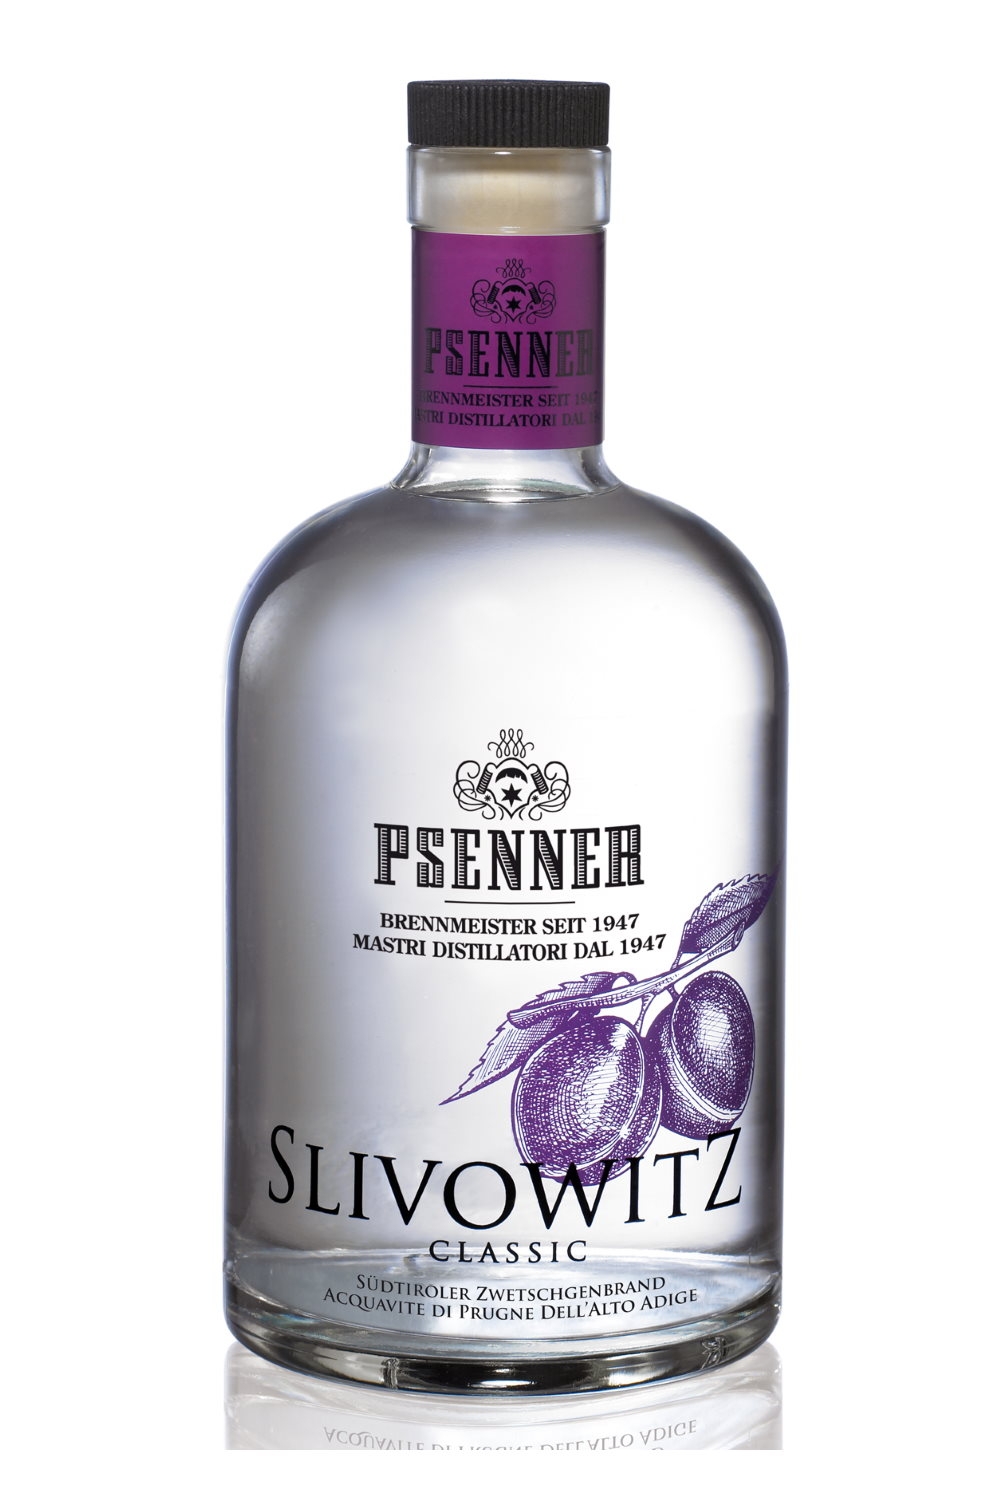 Slivowitz classic plum spirit from South Tyrol 40% vol. Psenner L.